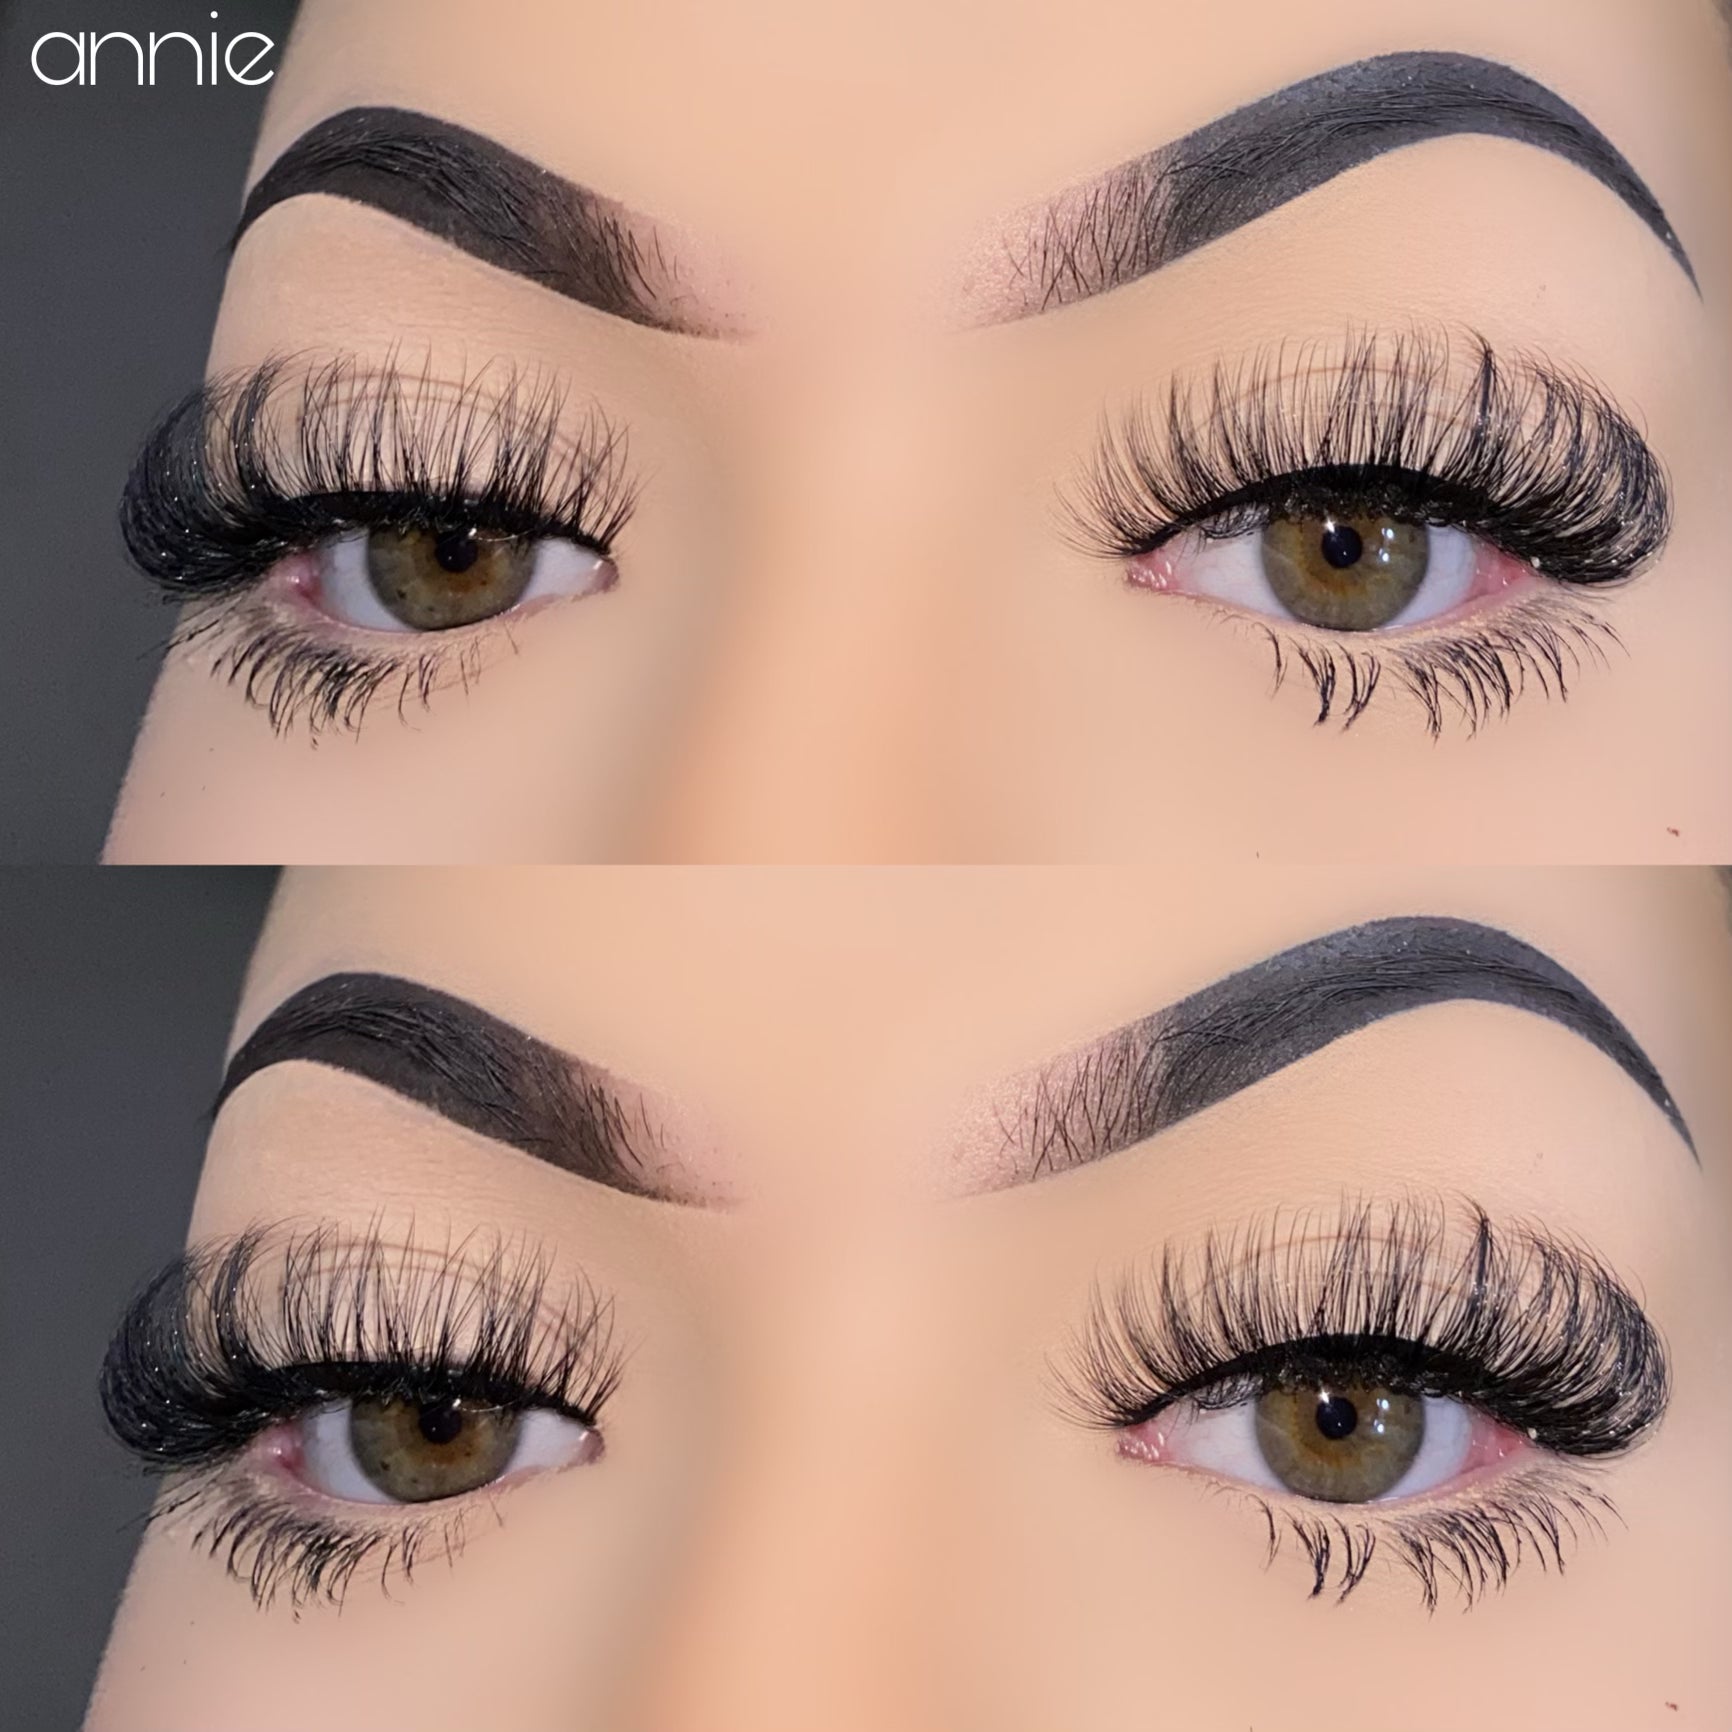 Annie - Eyeshine Cosmetics